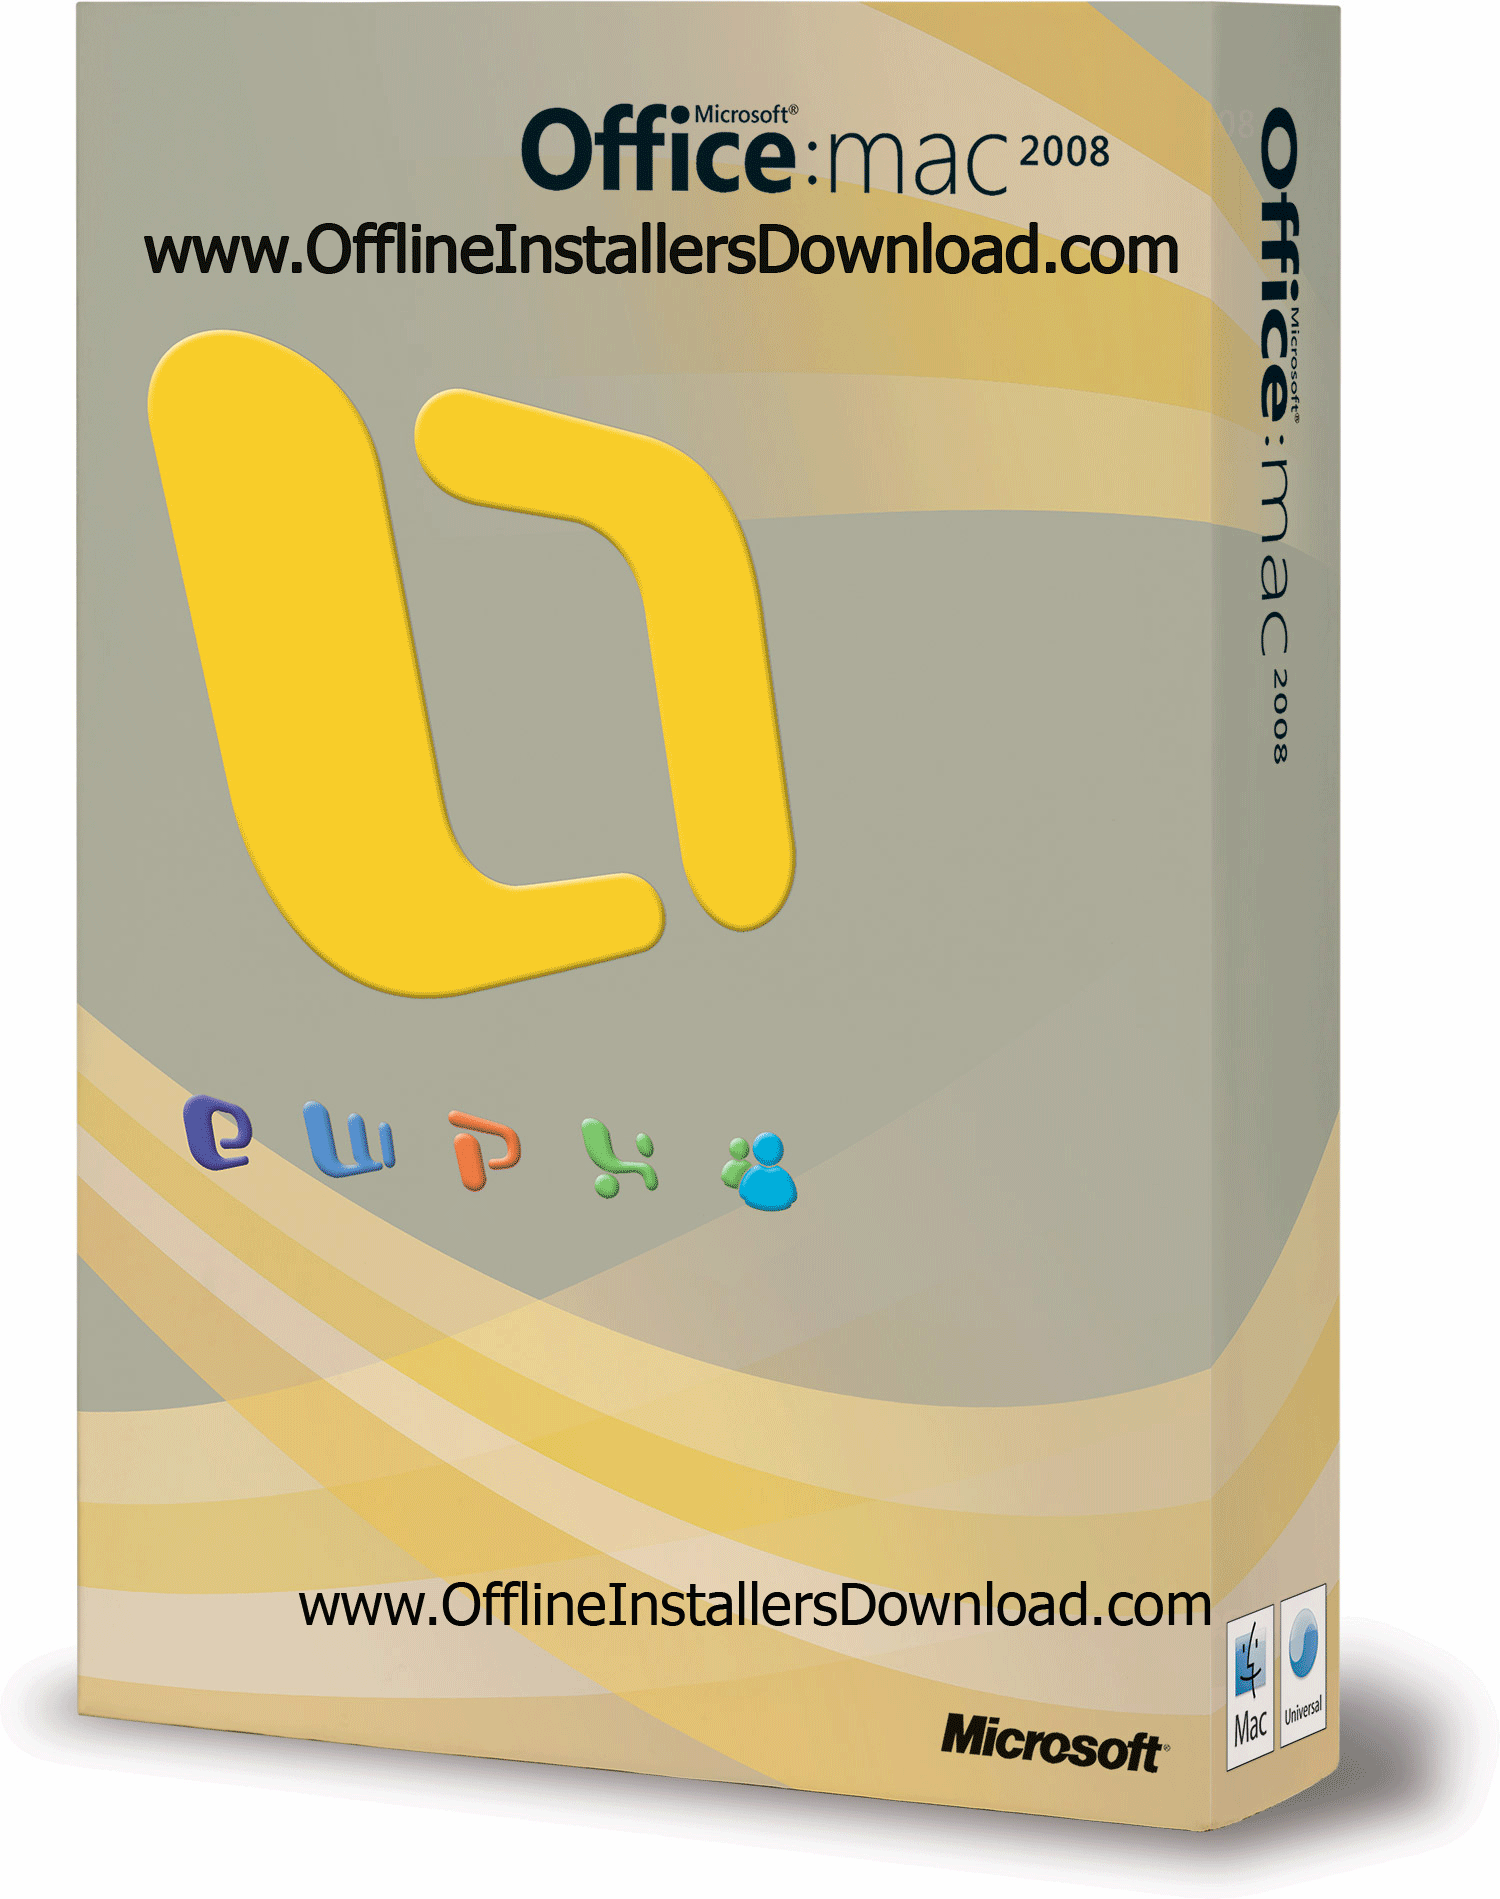 Office 2008 Mac free. download full Version